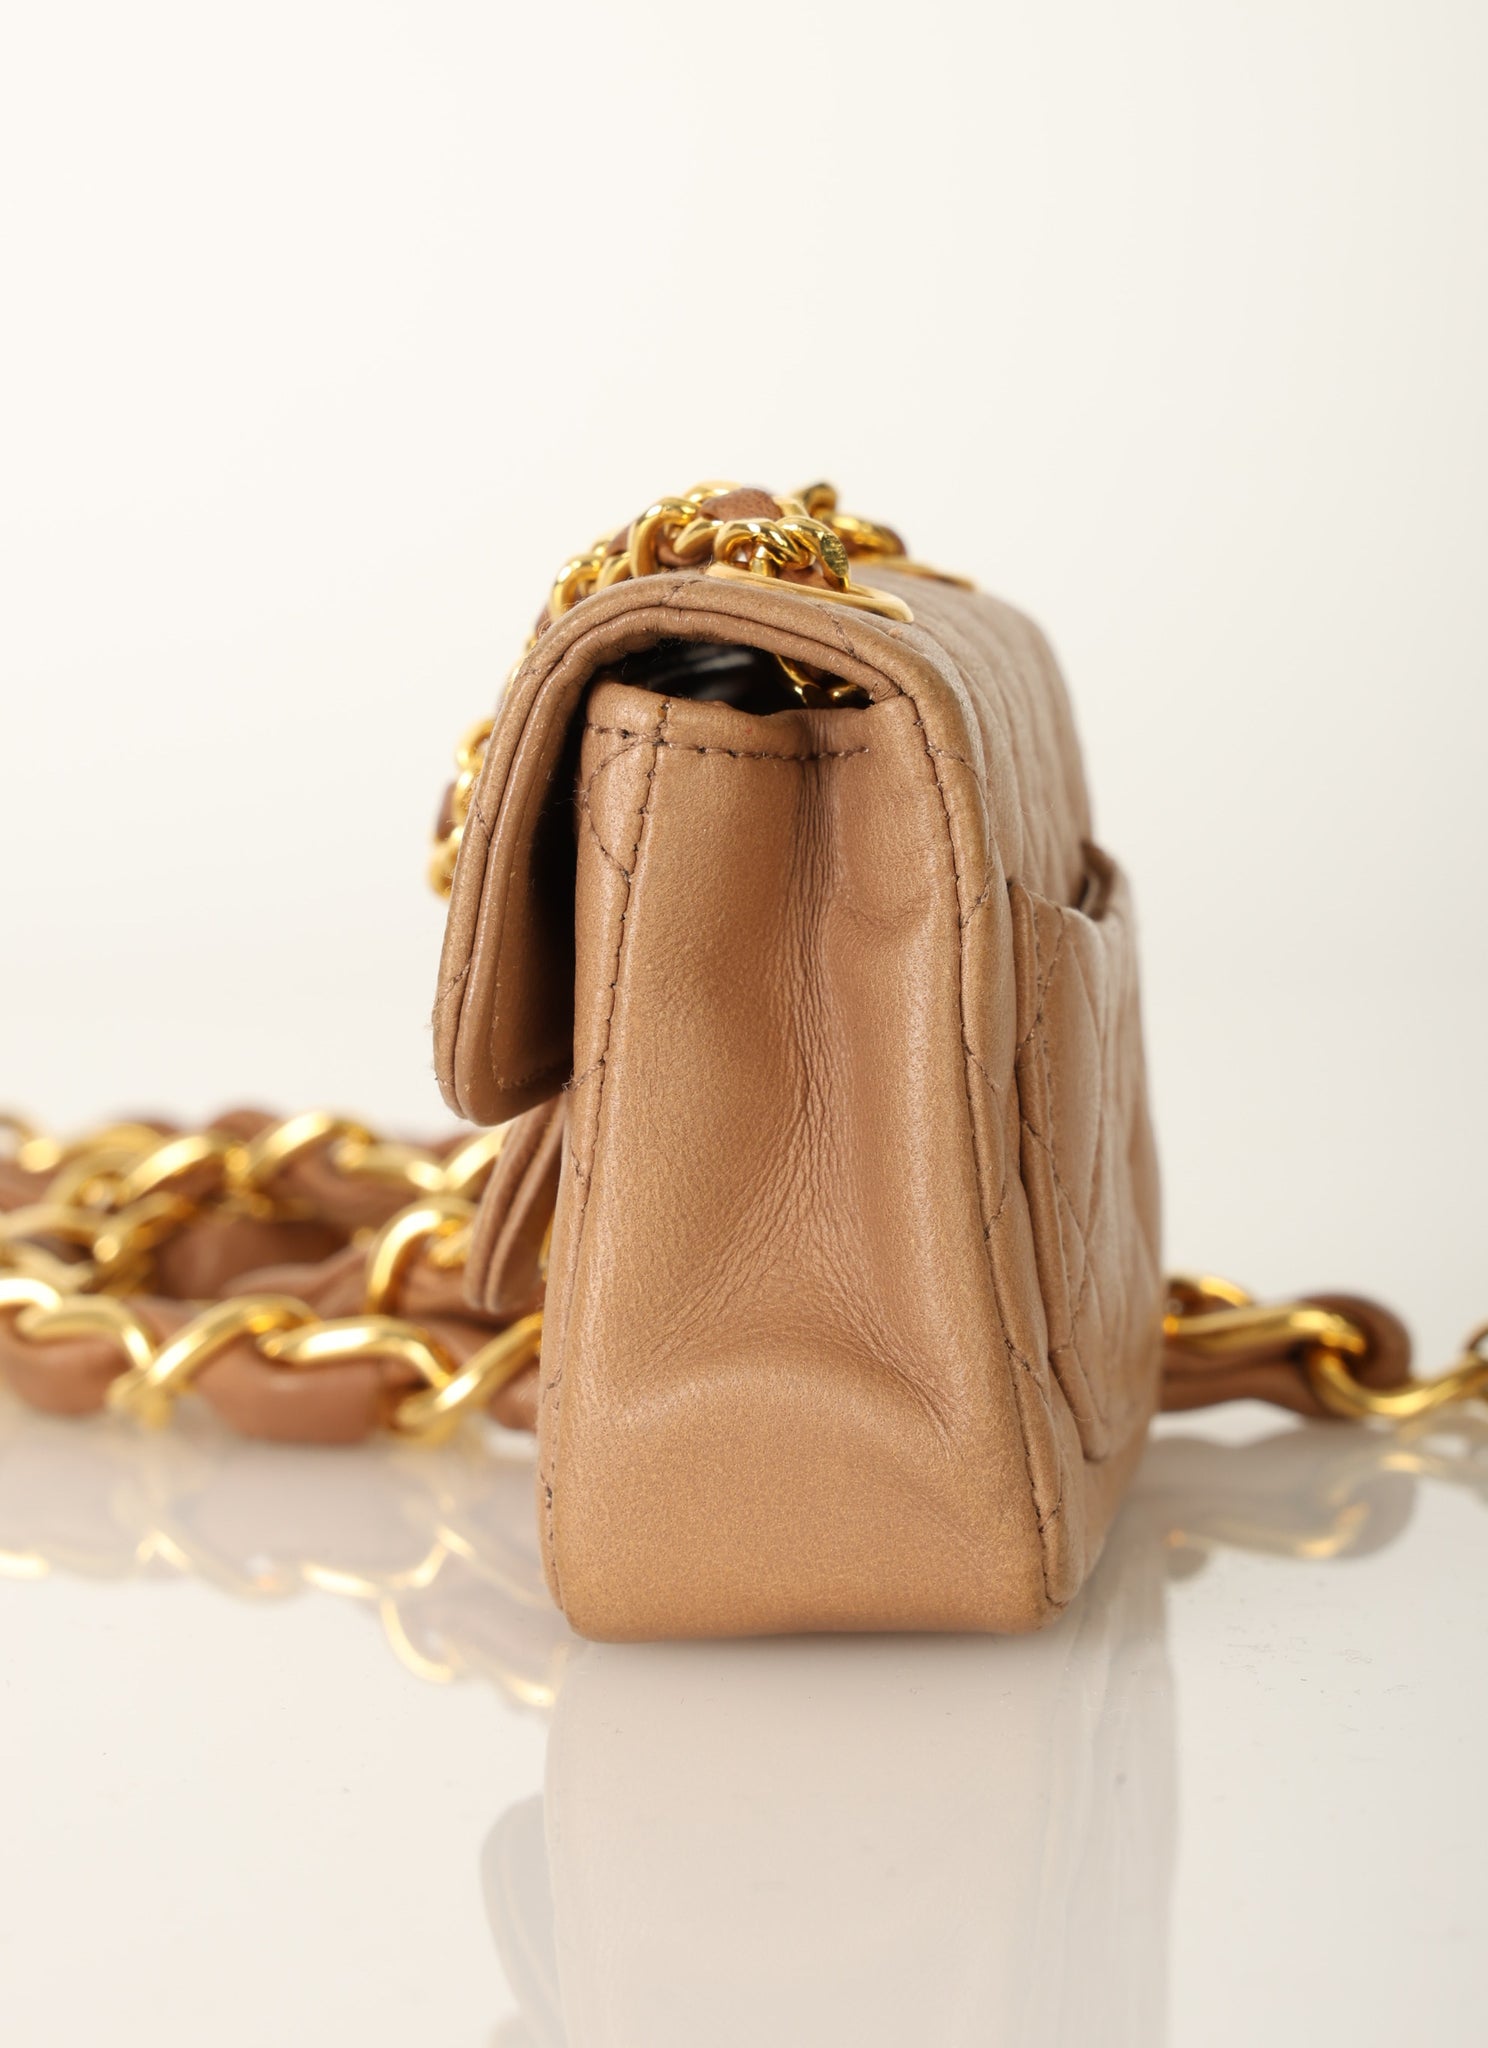 Rare Chanel Lambskin Micro Belt Bag